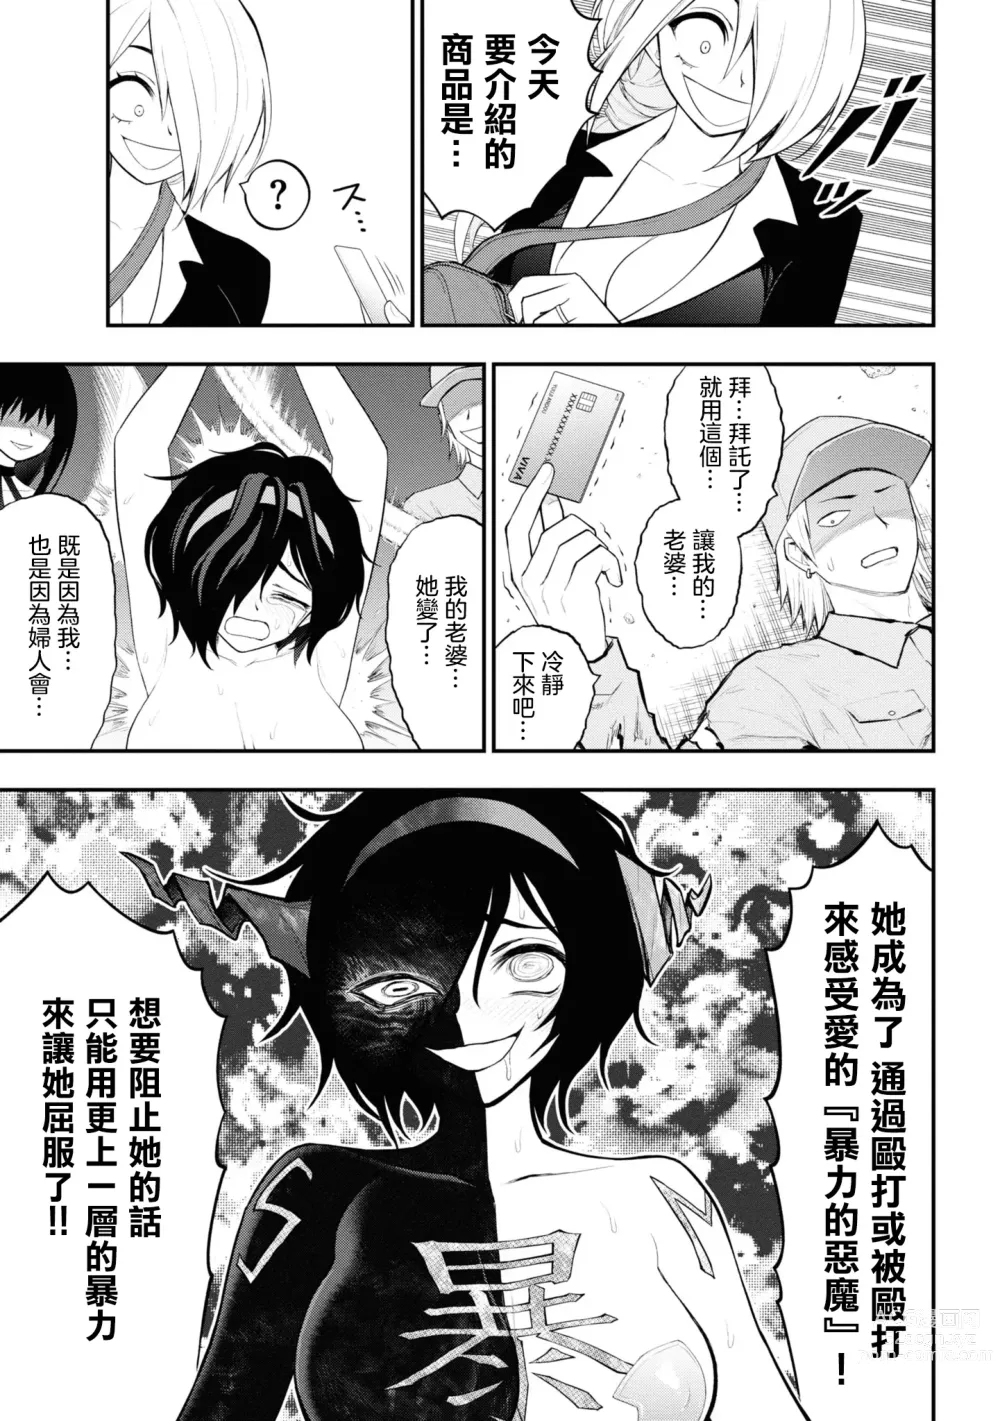 Page 114 of manga 淫獄小區 15-19話